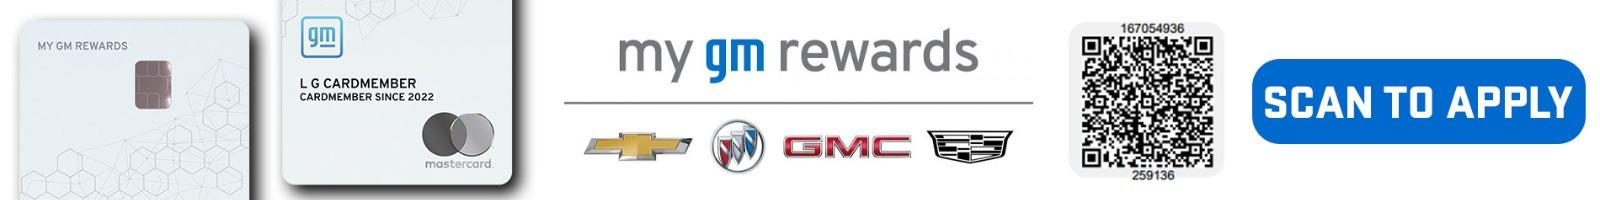 my gm rewards